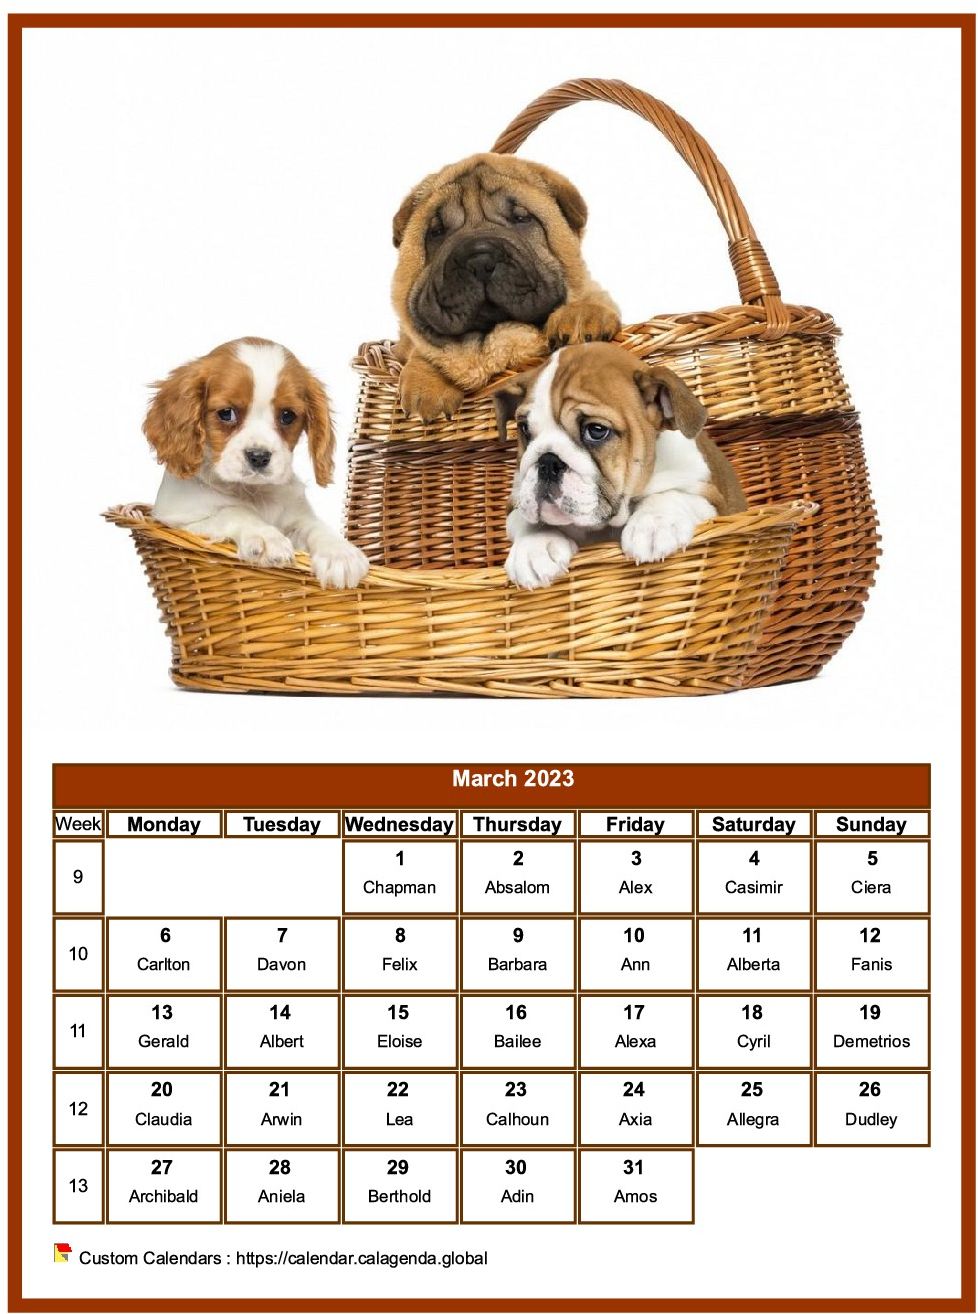 Calendar march 2023 dogs